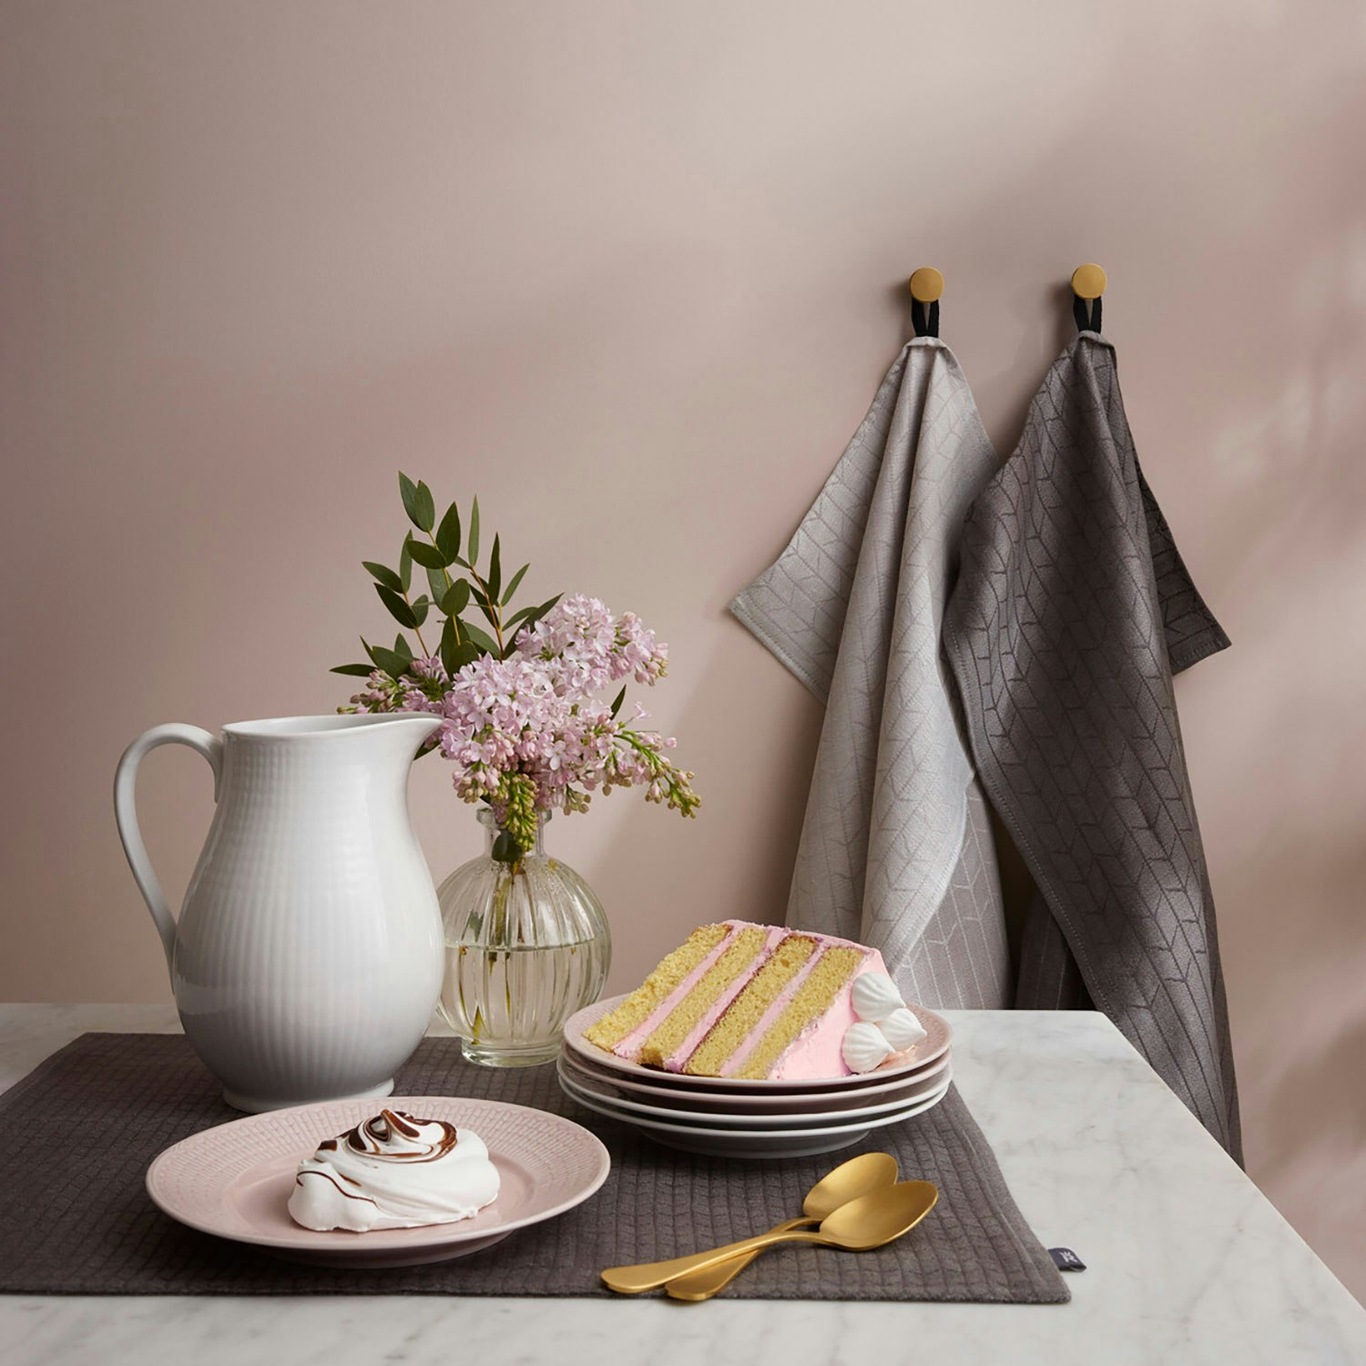 https://royaldesign.com/image/2/rorstrand-swedish-grace-kitchen-towel-47x70-cm-1?w=800&quality=80